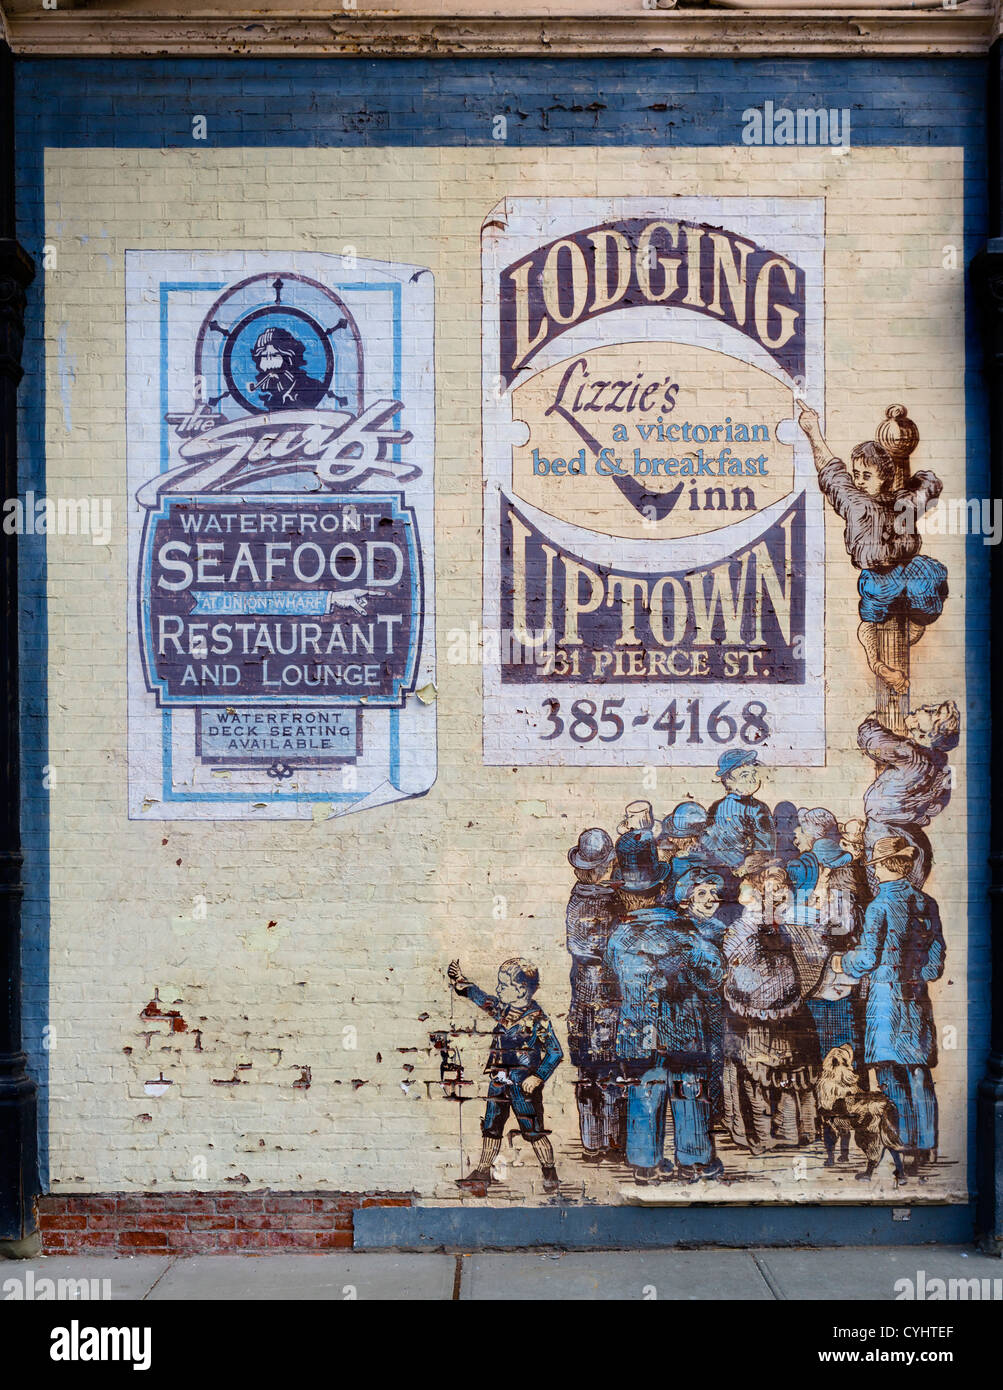 Mural advertising lodging and restaurant, Port Townsend, Olympic Peninsula, Washington, USA Stock Photo